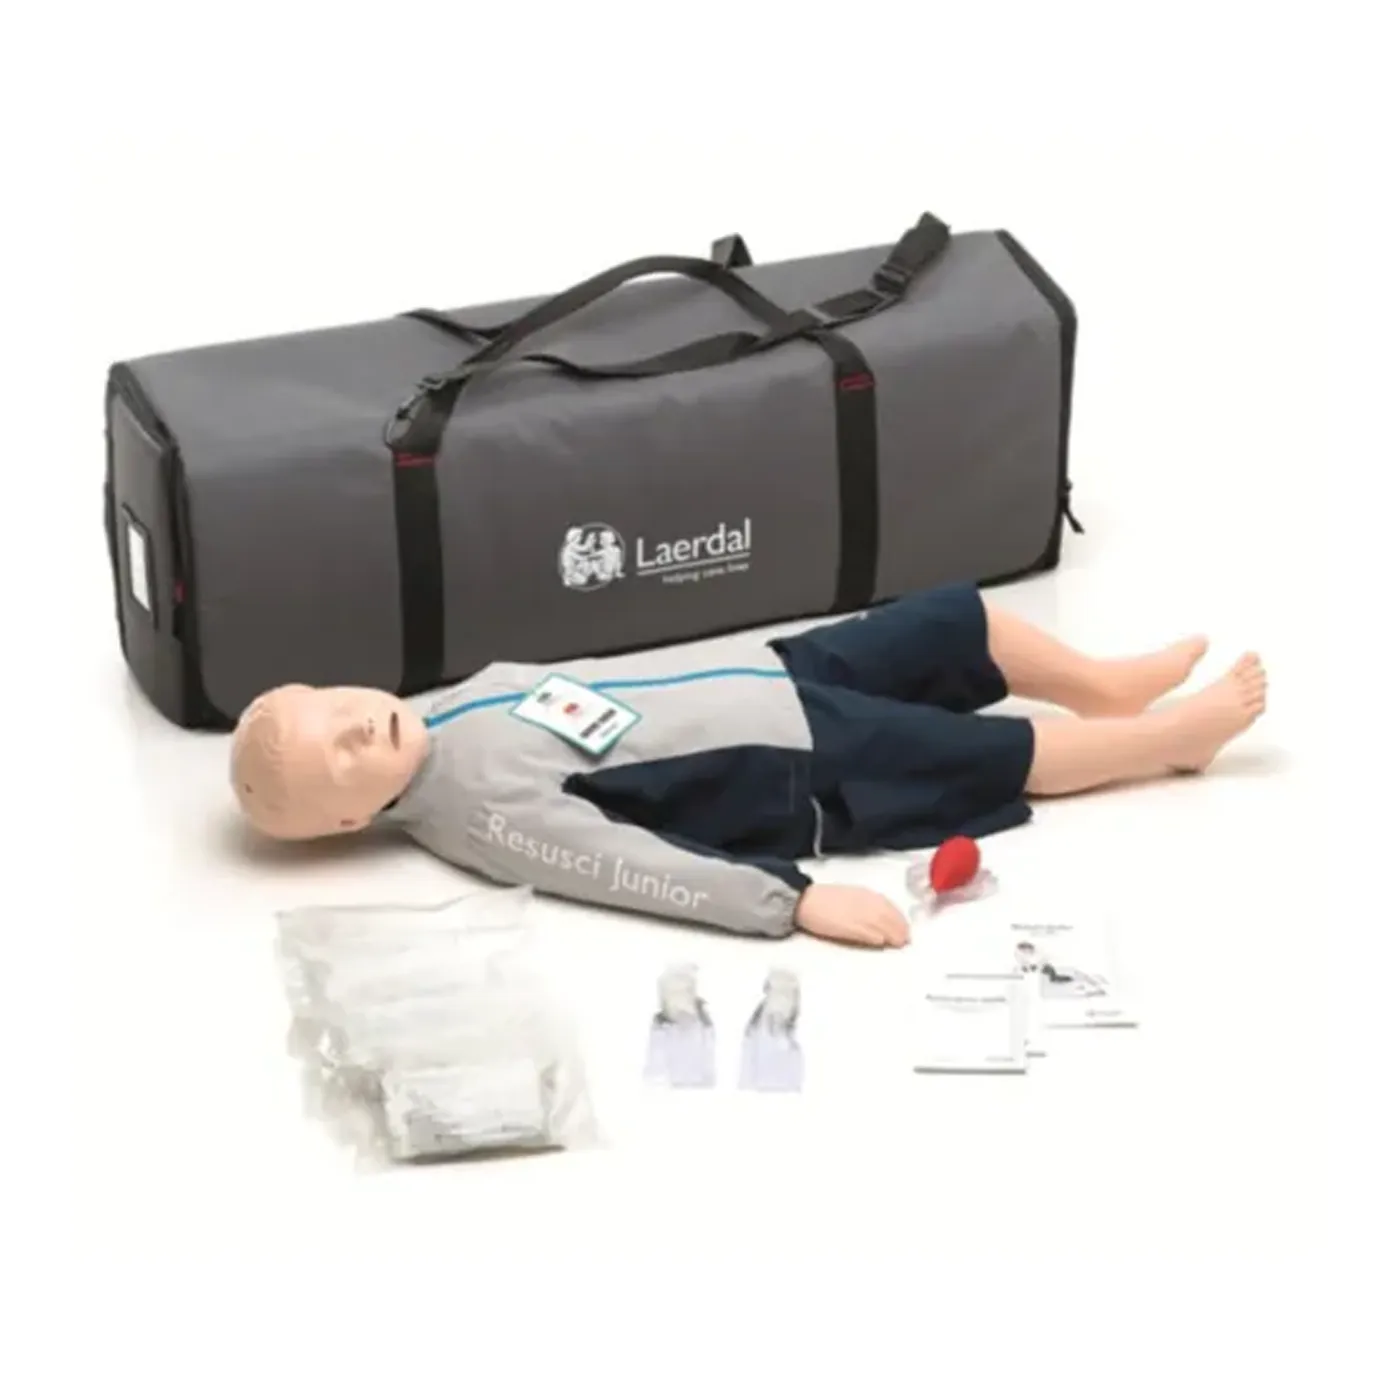 GB Medicali - Laerdal Resusci Junior QCPR - 1